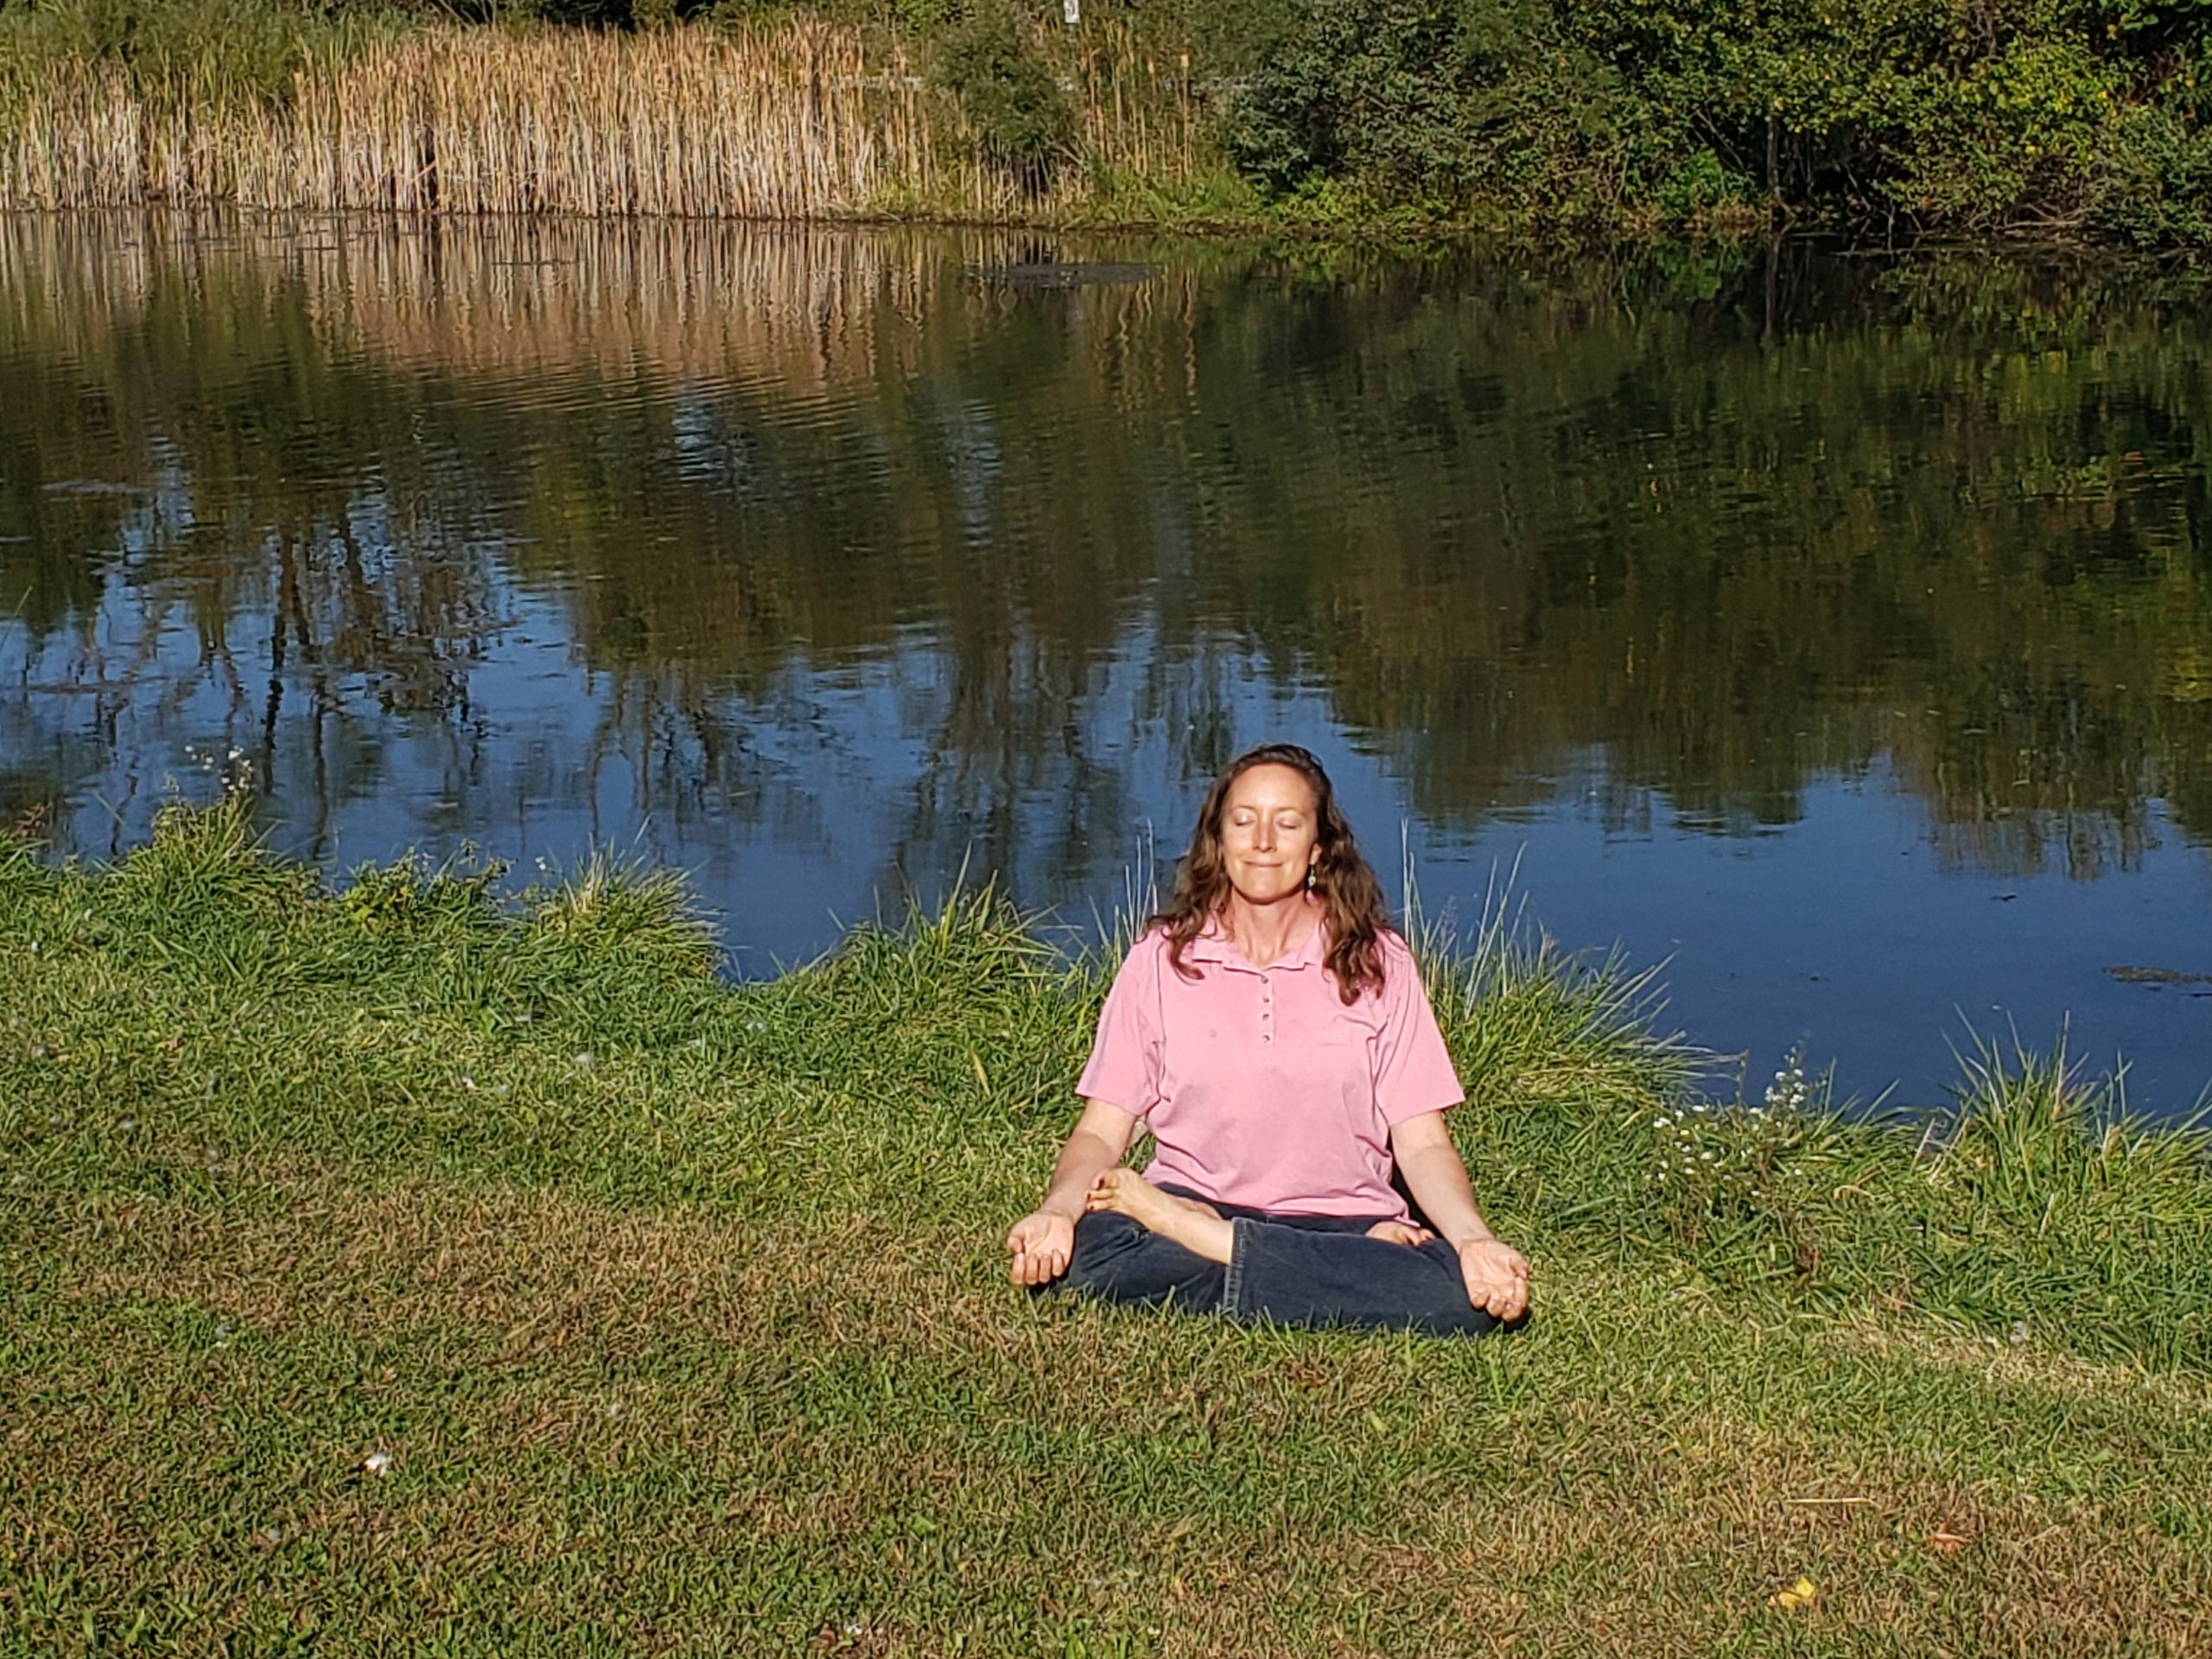 Linda looking peaceful meditating